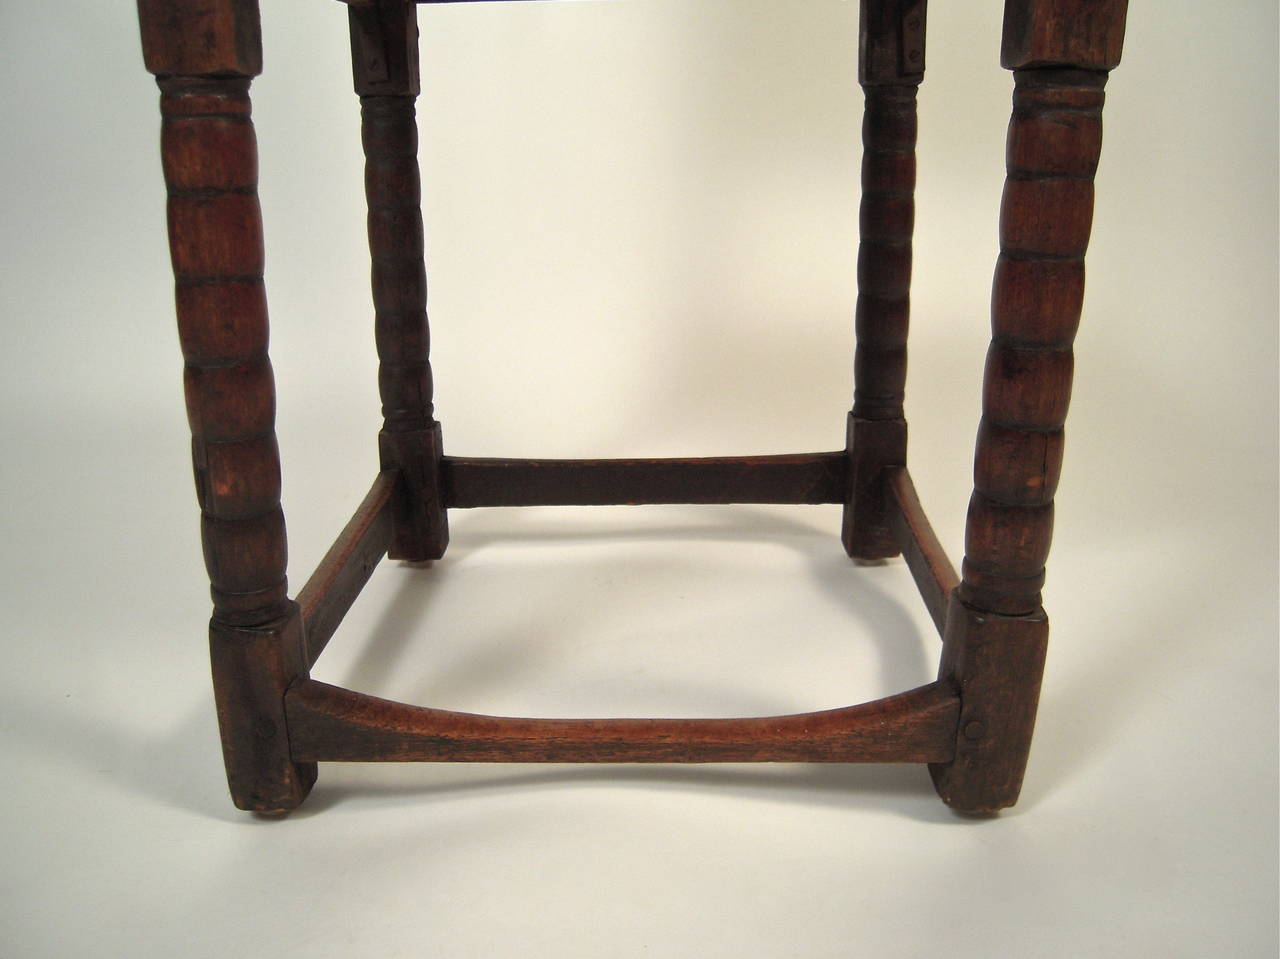 17th century chairs